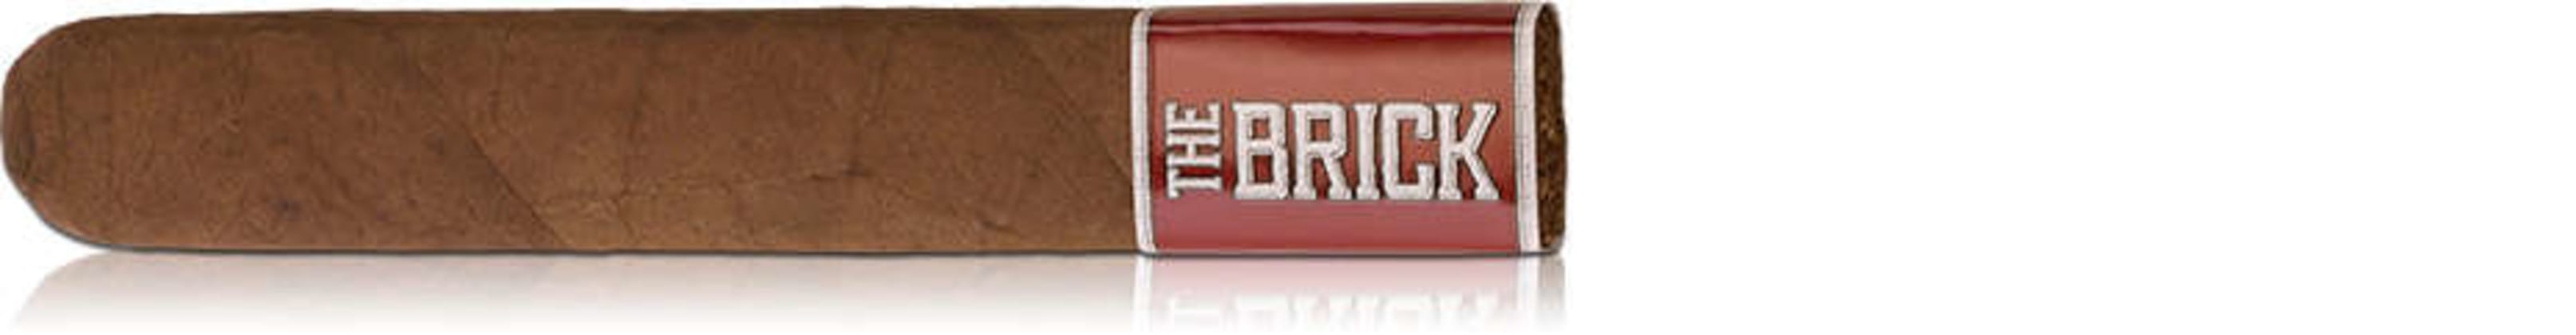 The Brick By Torano BFC Single